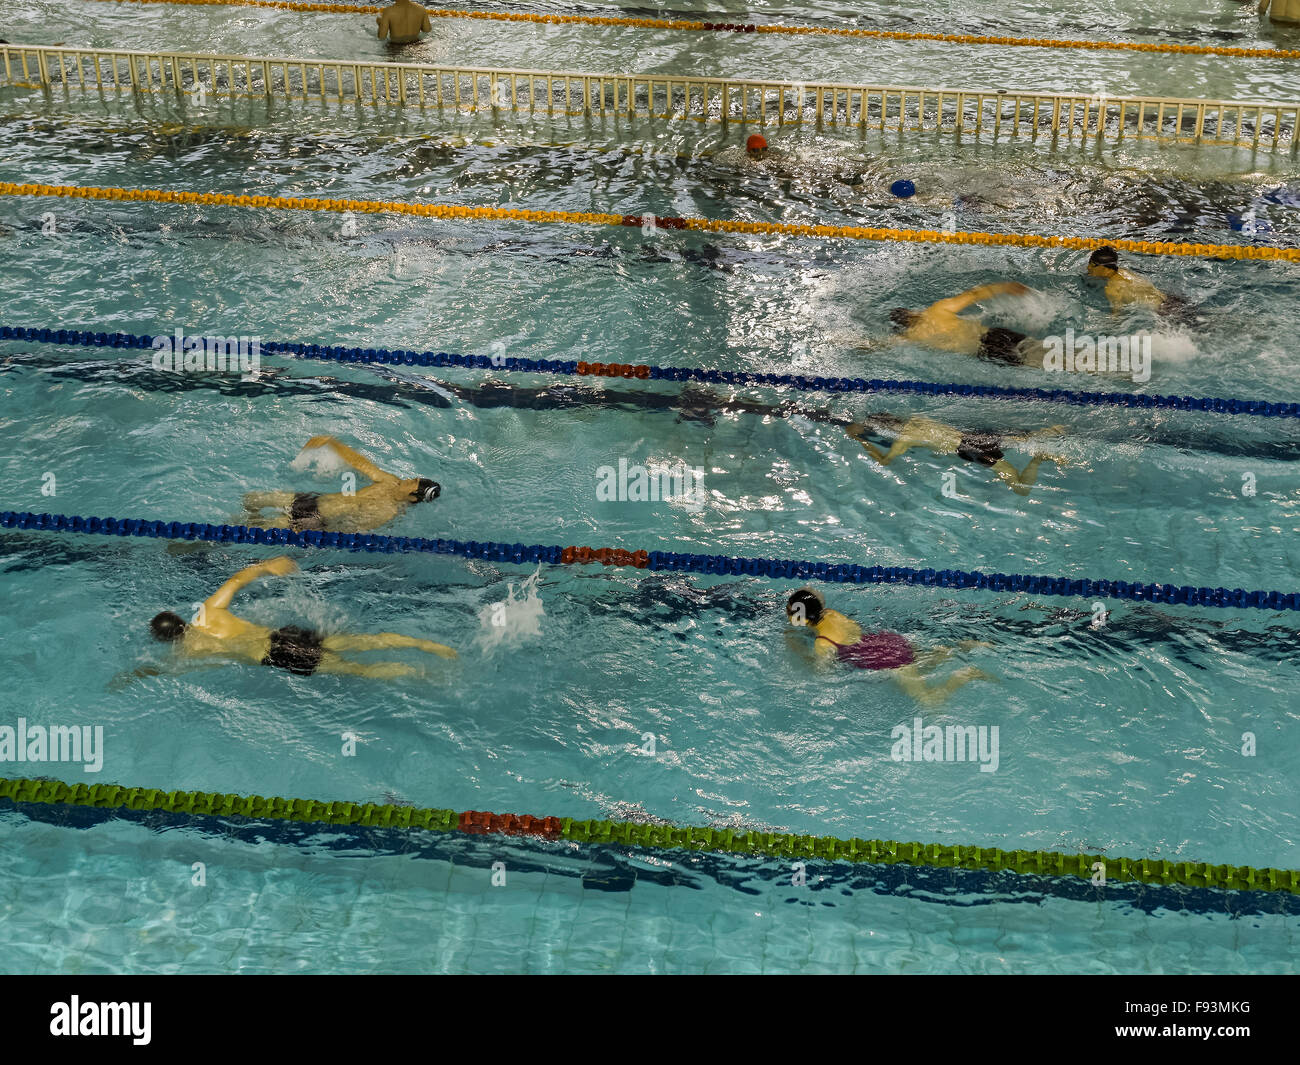 Hallenbad-Wasser-Würfel bei Olympic Center, Peking, China, Asien Stockfoto